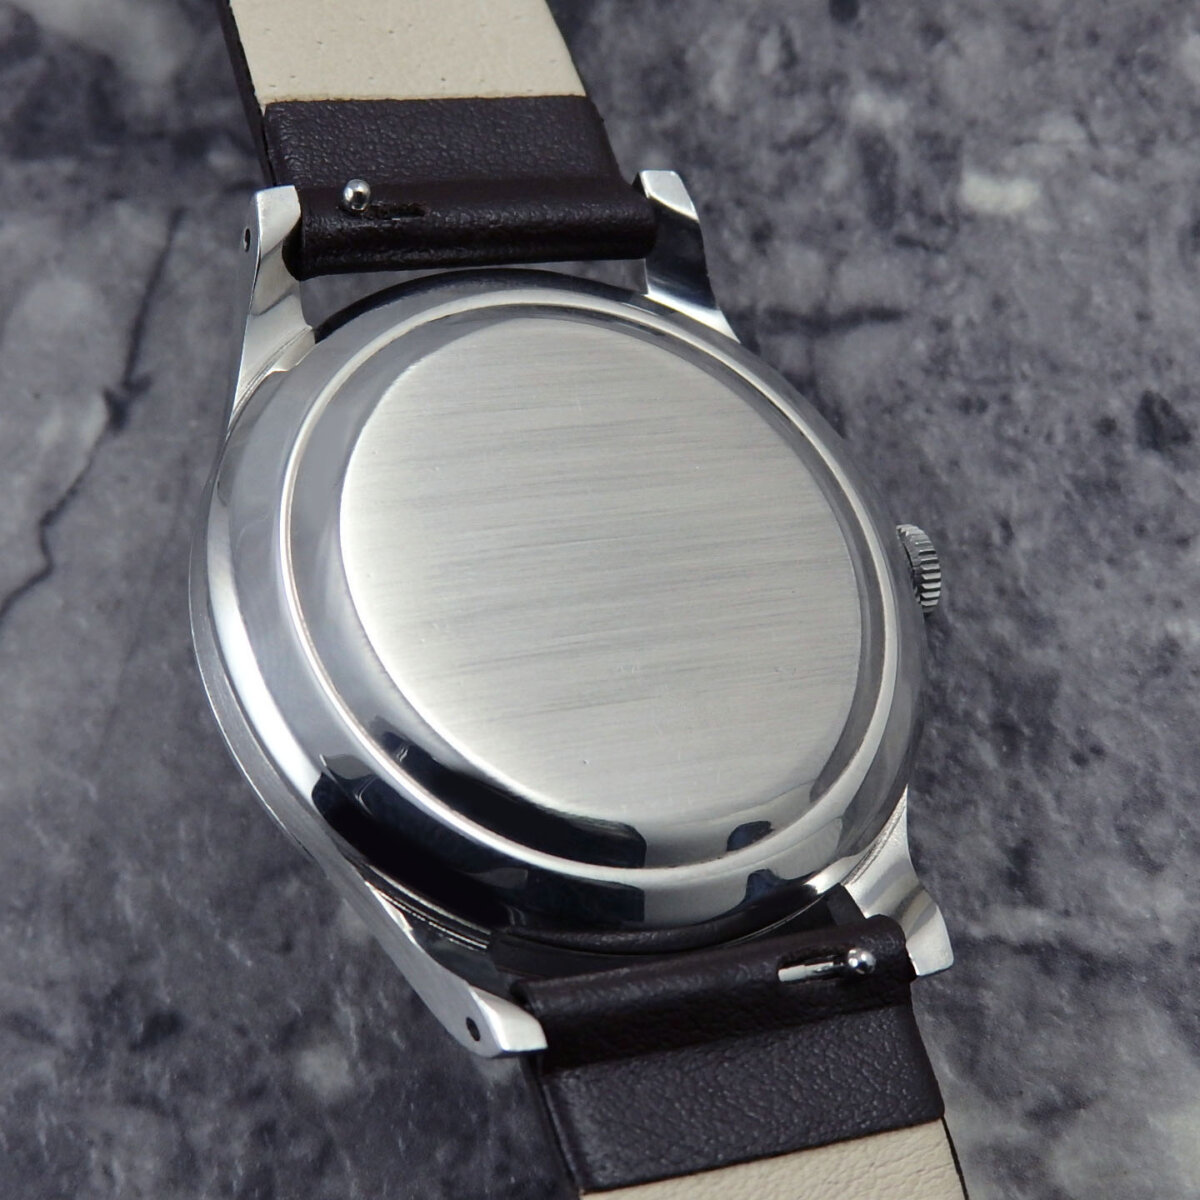 IWC 寄り目デイト ヴィンテージ 1962年 ペラトン式自動巻 | アンティーク時計の販売ならアンティークウォッチライフ